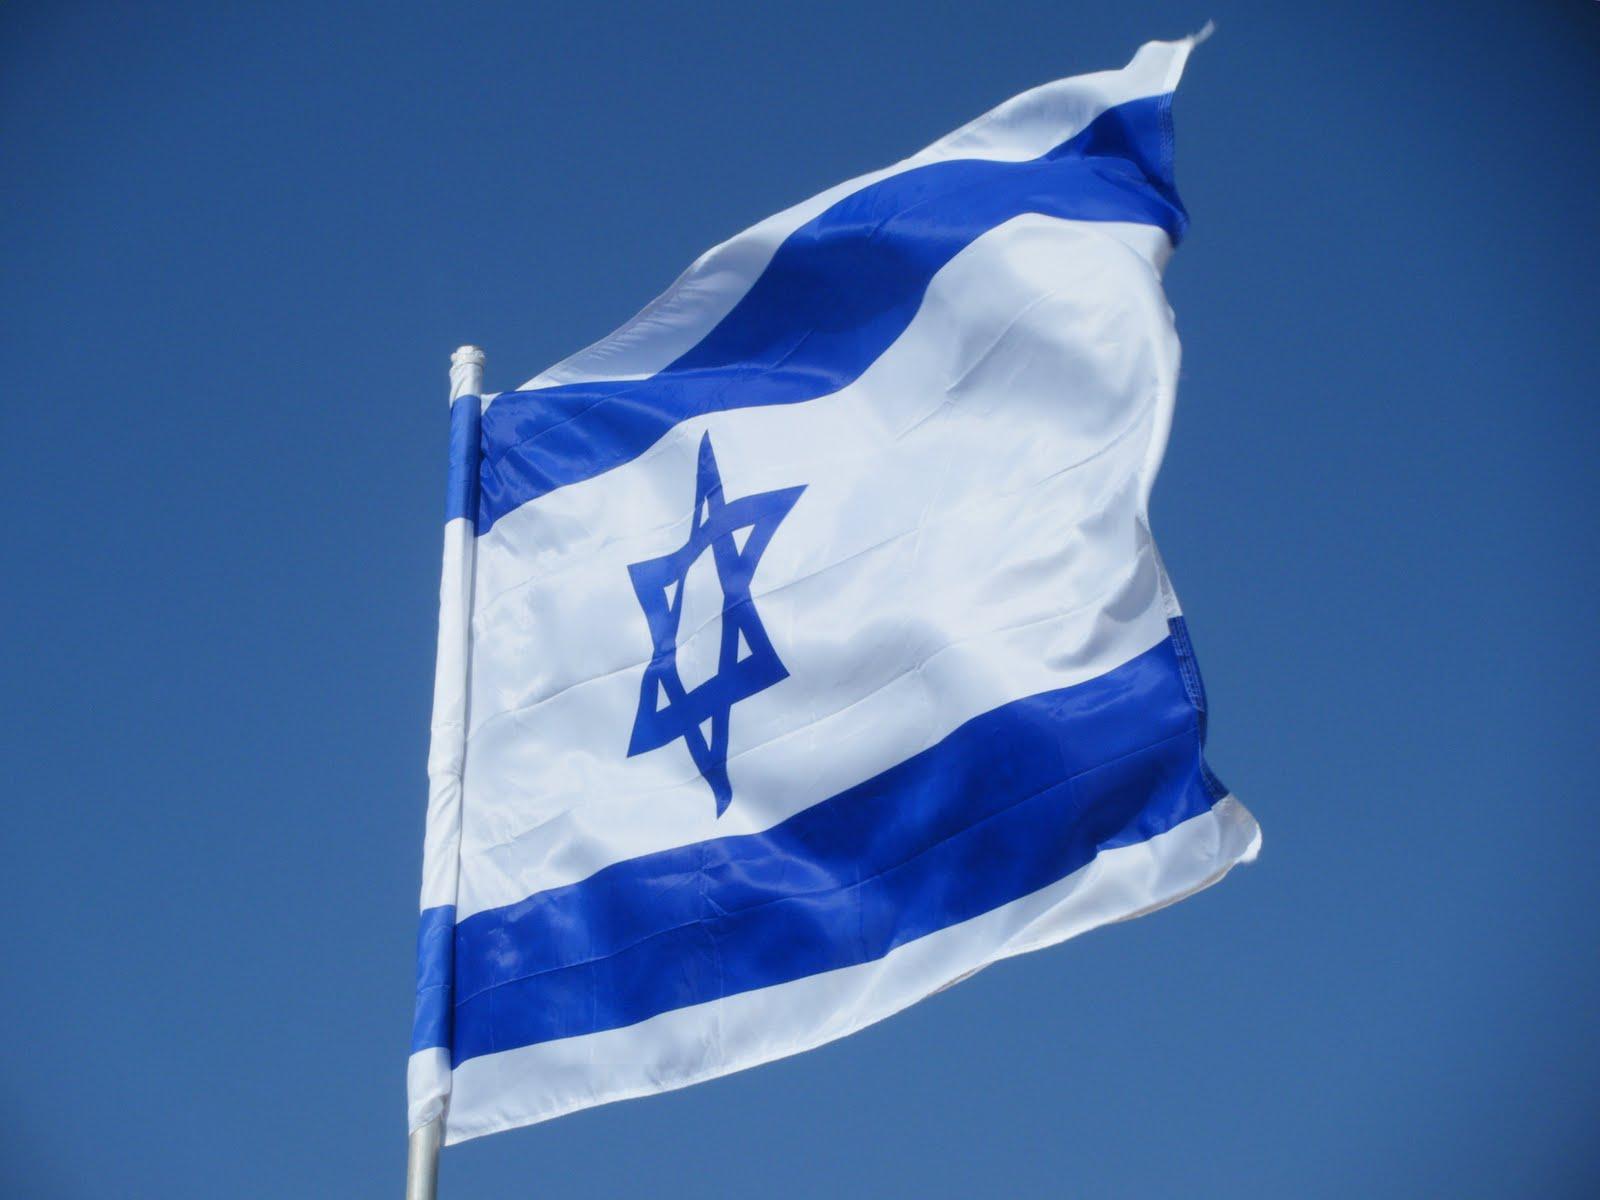 Israel Flag Wallpaper. waving flag of Israel. F